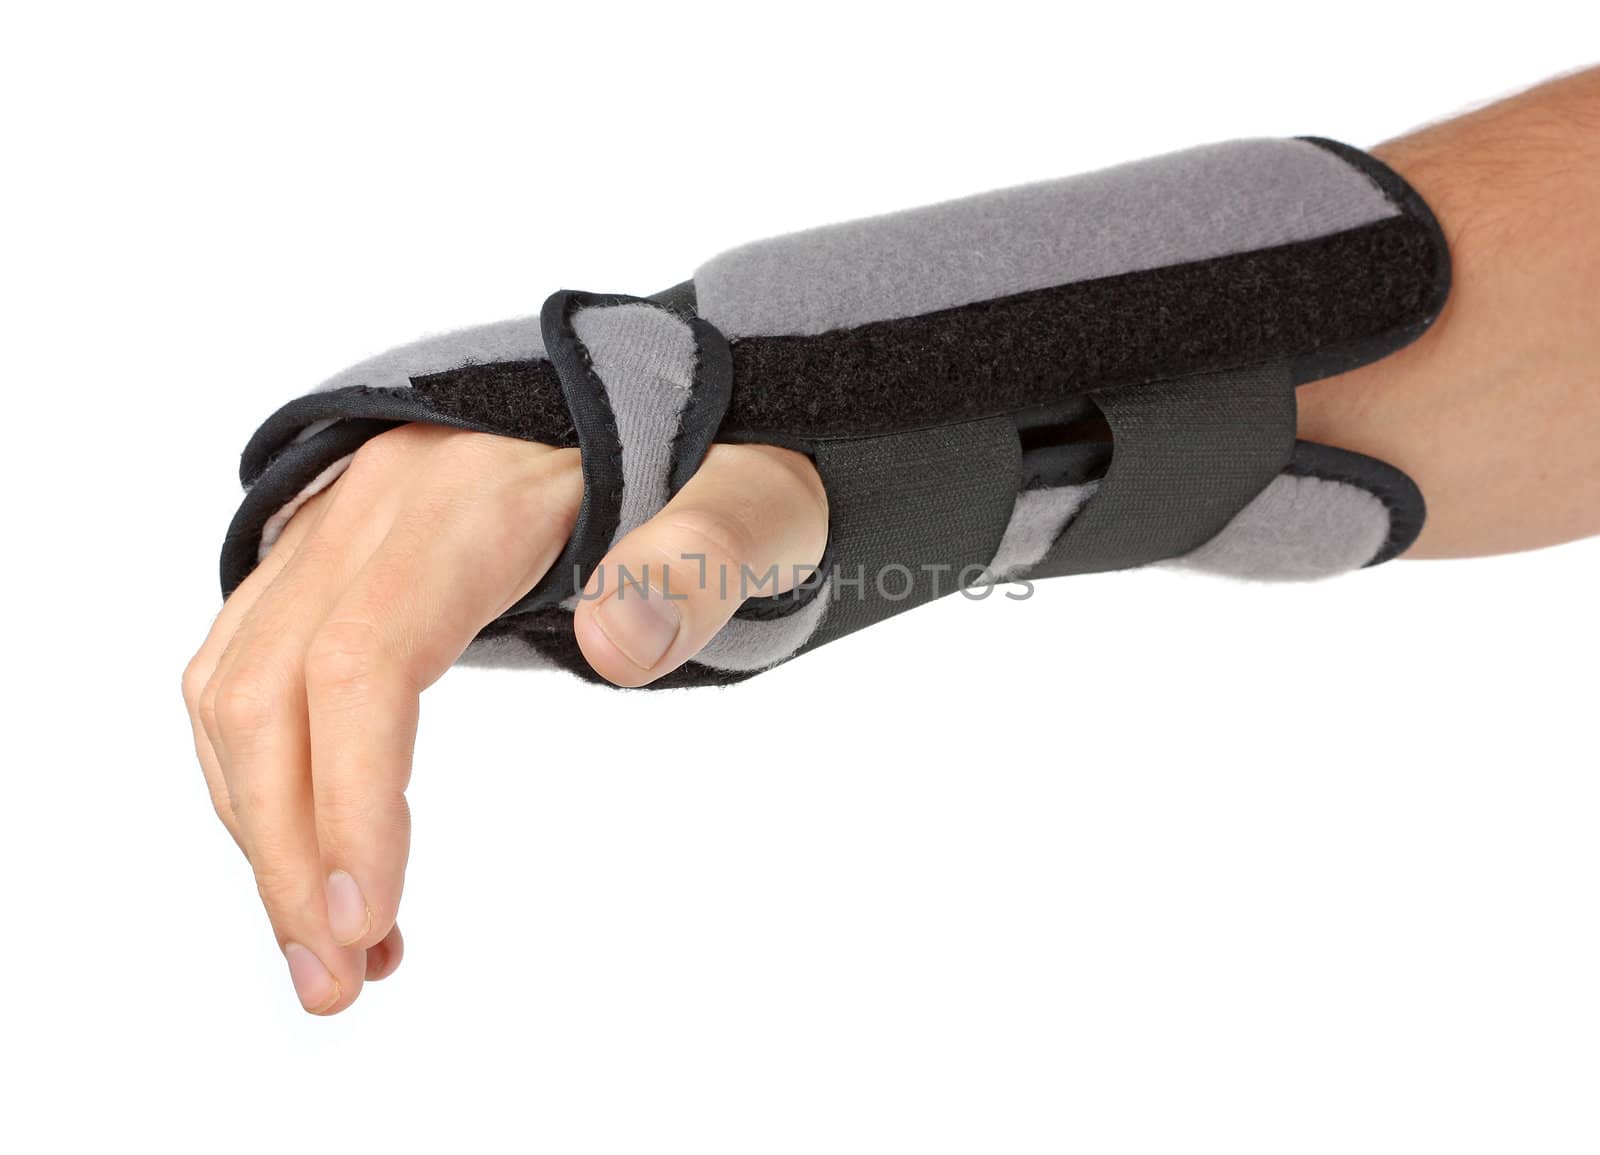 Human hand with a wrist brace, orthopeadic equipment over white